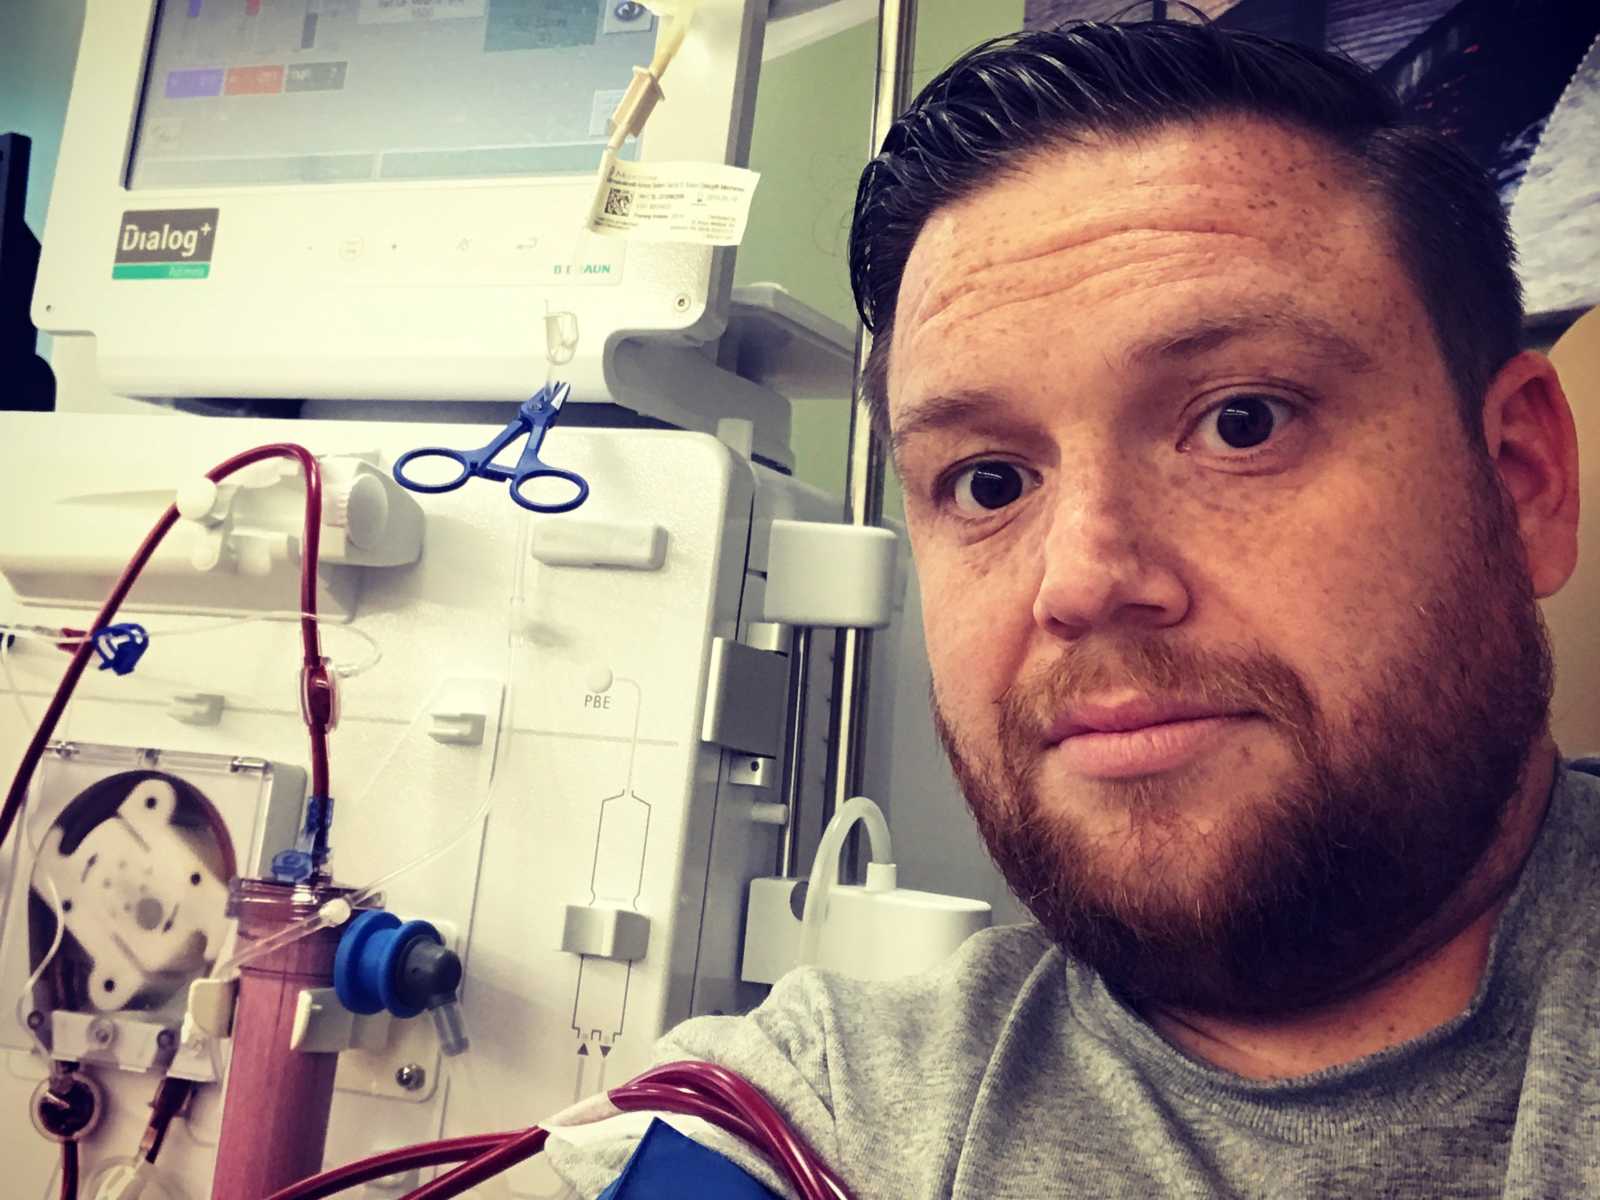 Man who needs kidney transplant takes selfie with hospital machine